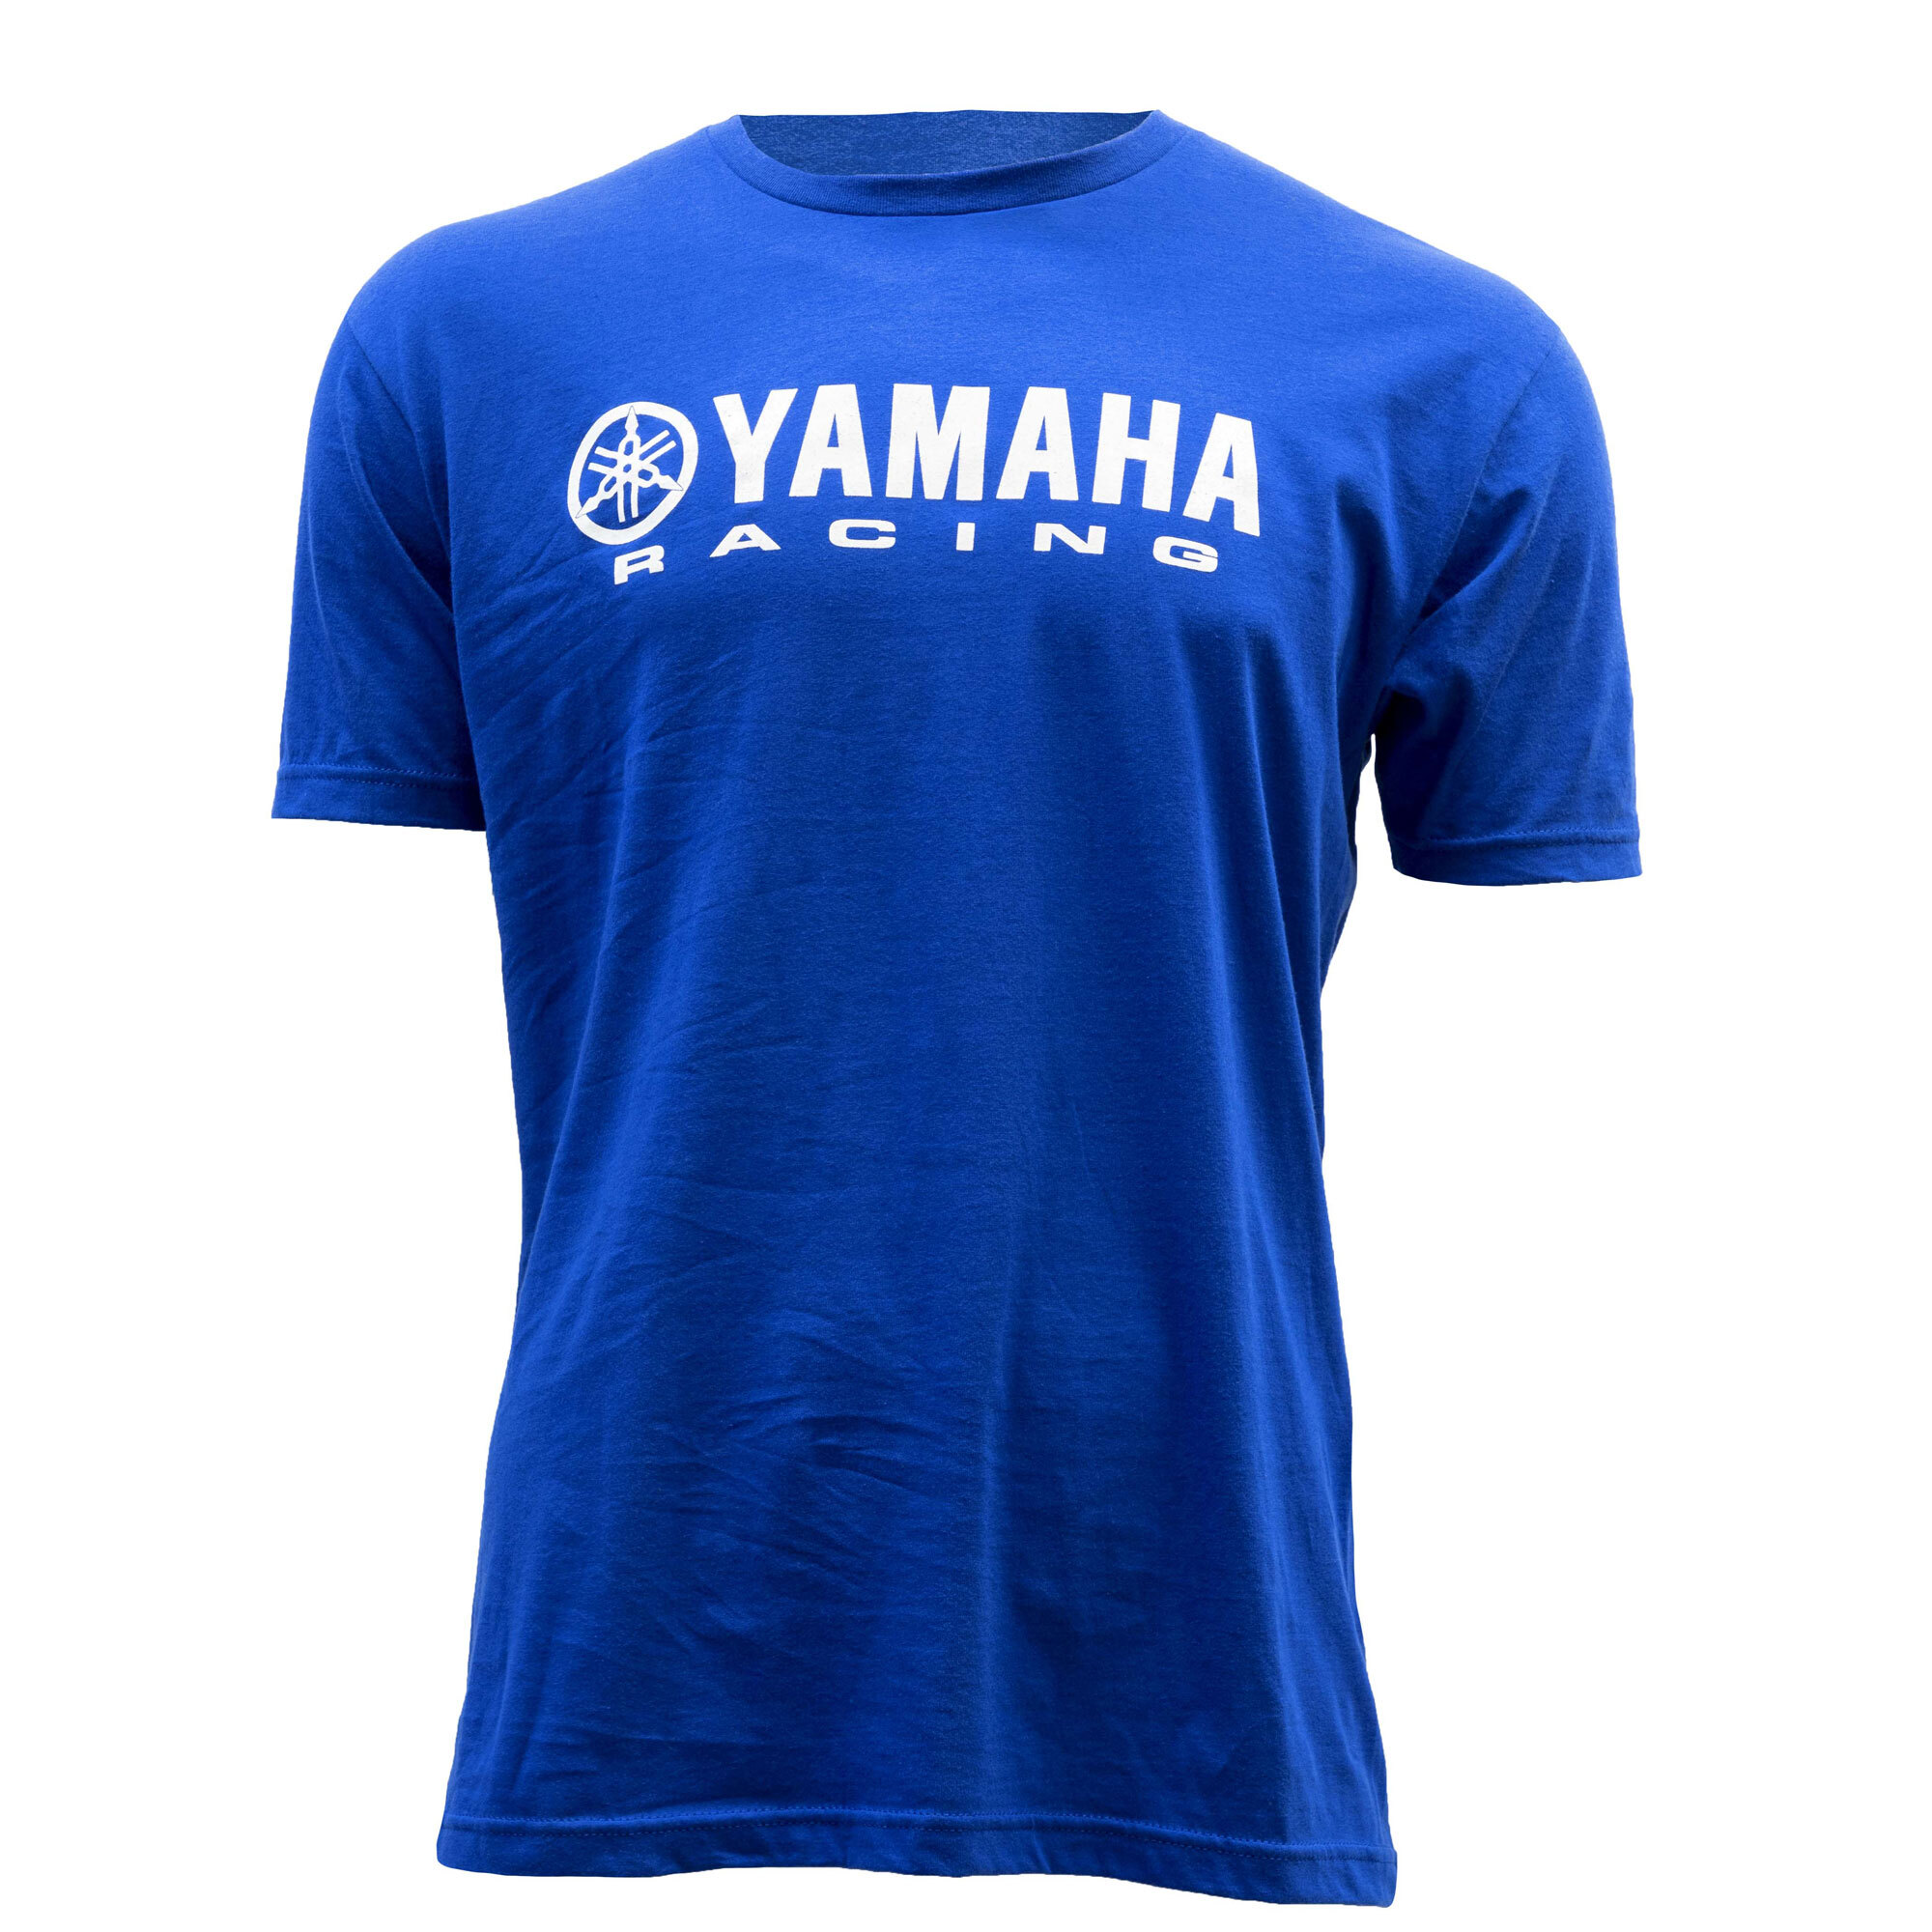 Yamaha Racing T Shirt Small blue